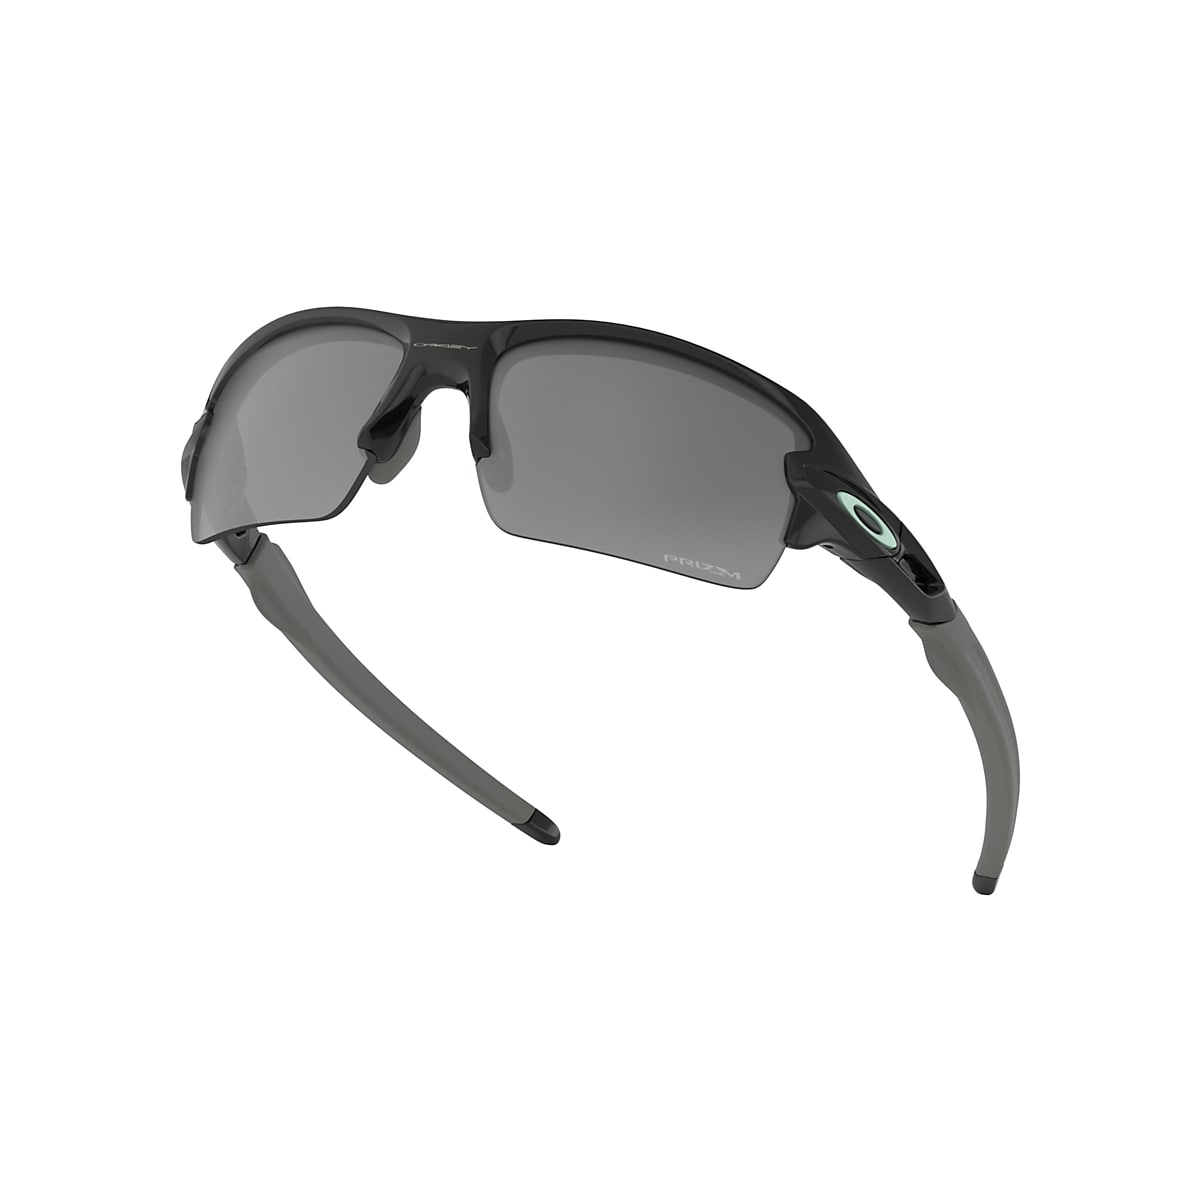 Flak® XS (Youth Fit) Polished White Sunglasses | US